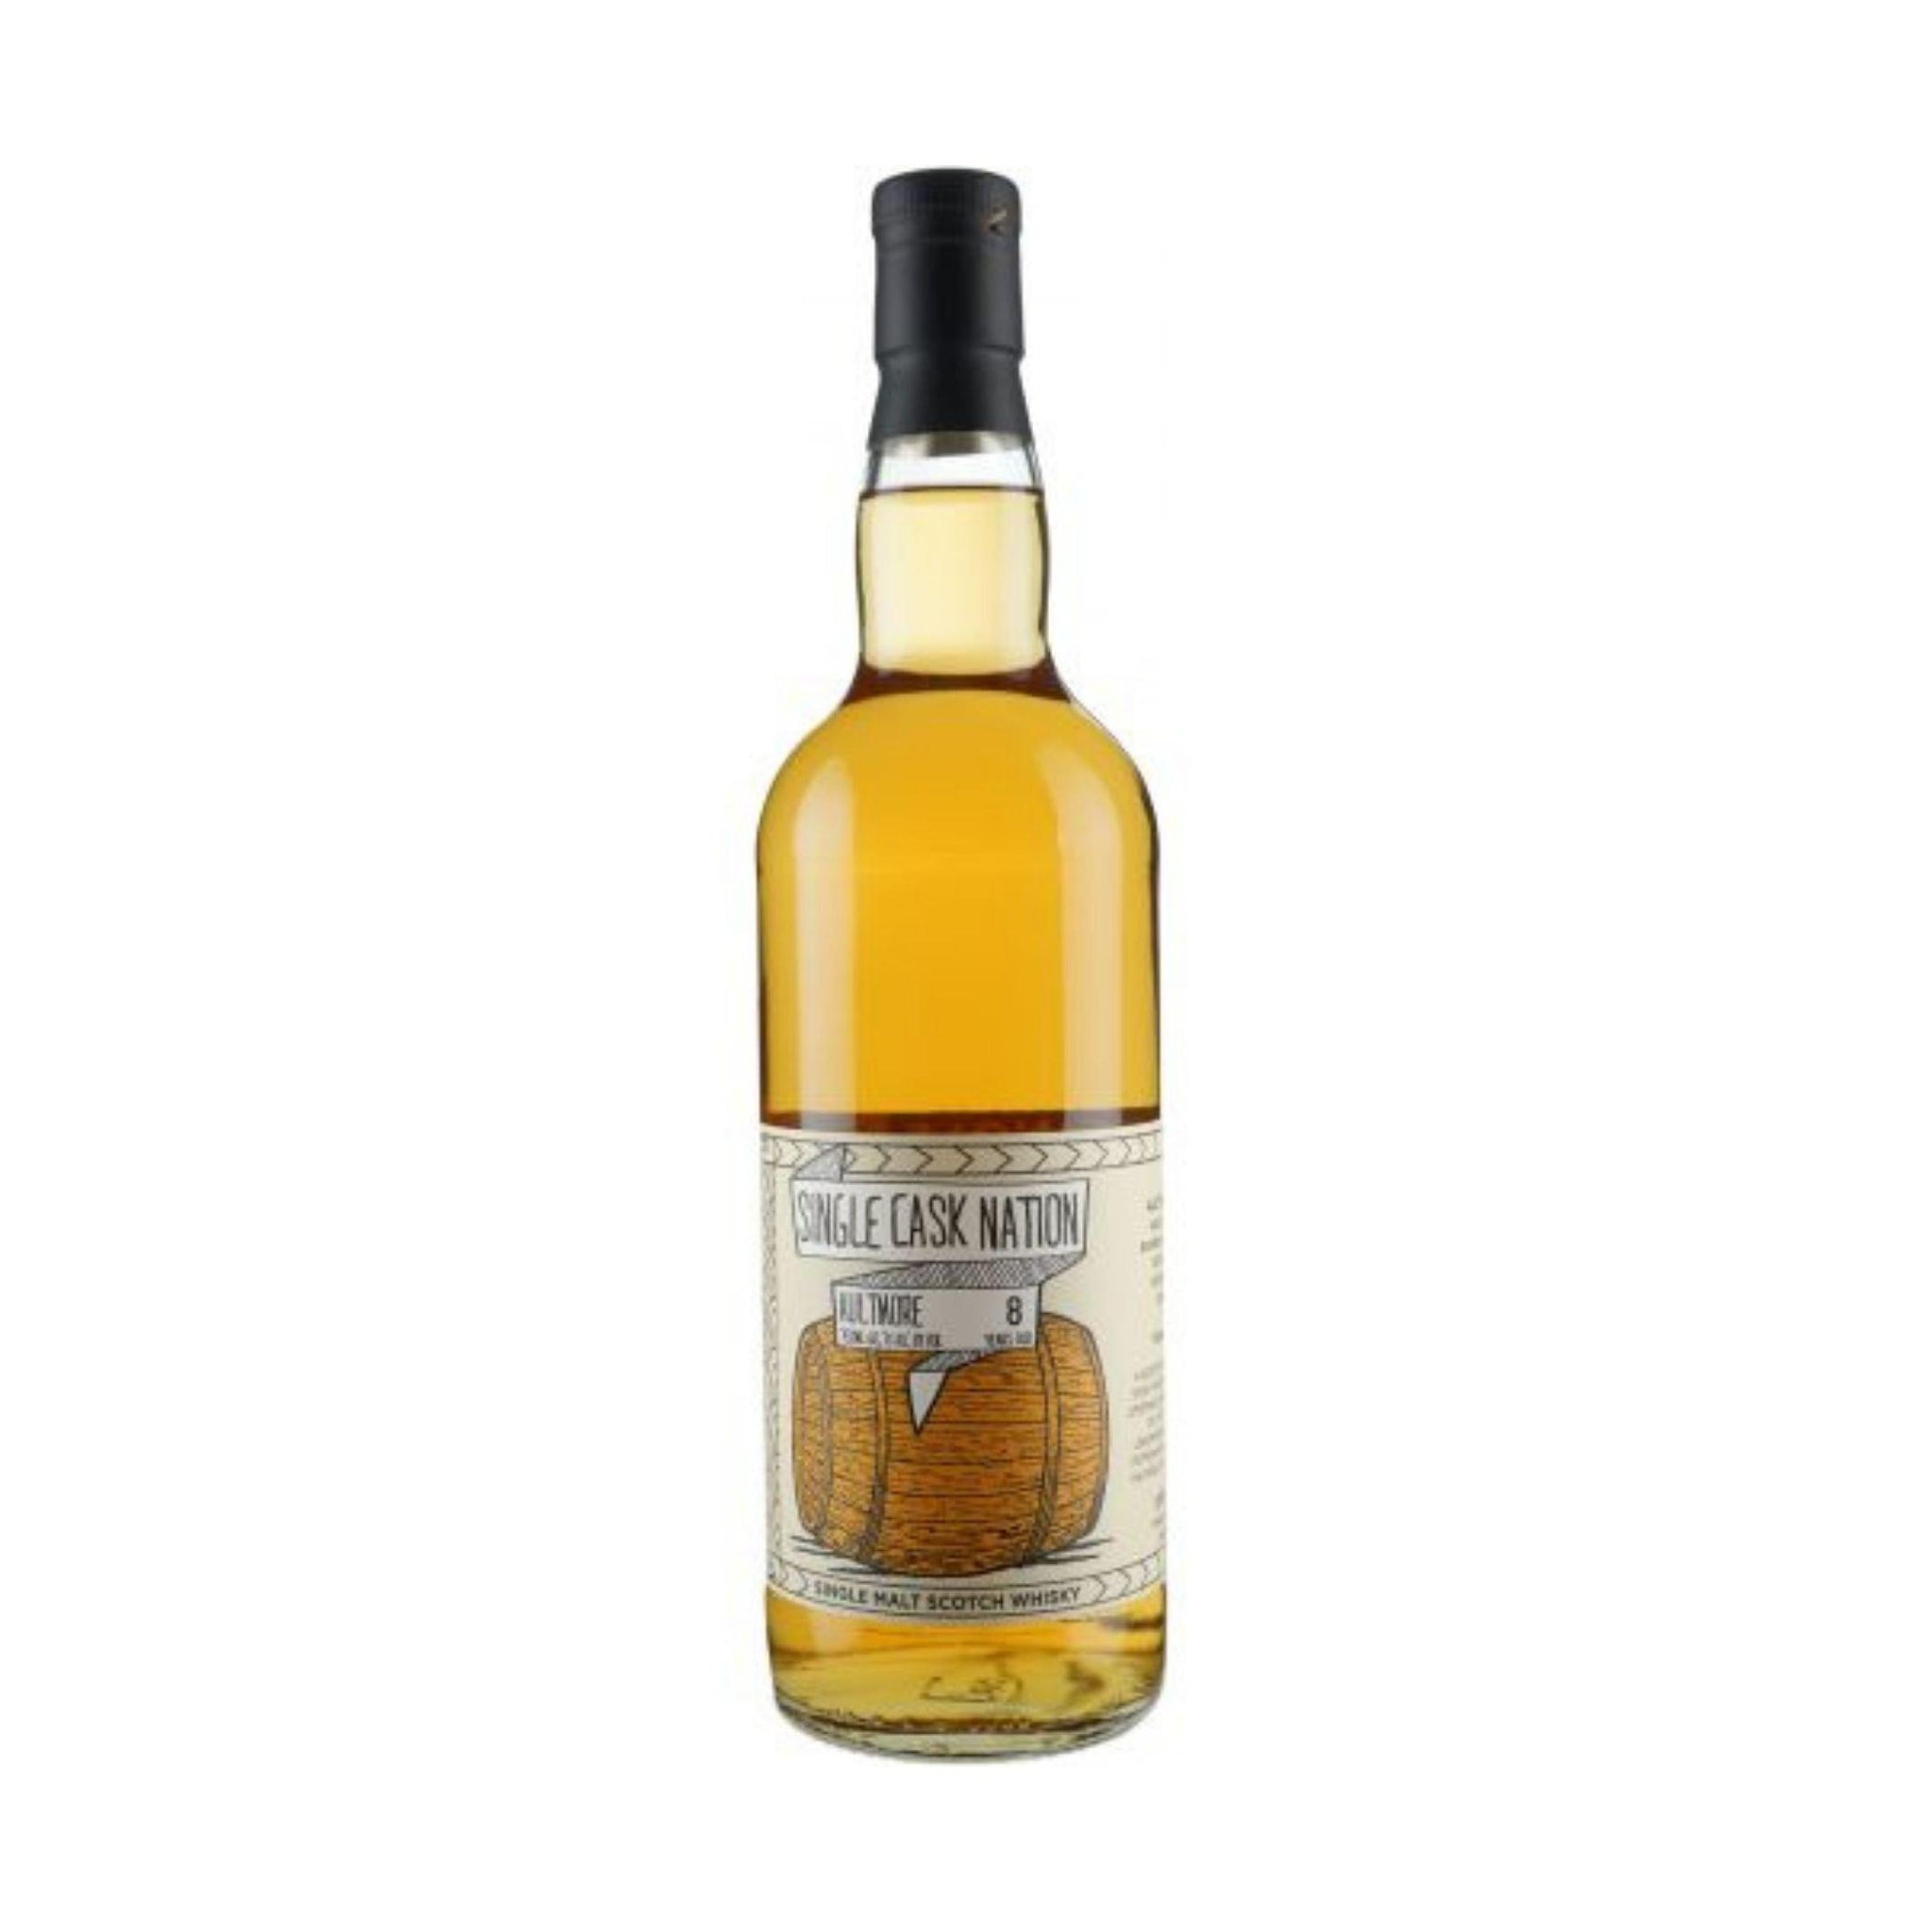 Single Cask Nation, Aultmore 8 Year Old Cask #800233 Single Malt Scotch Whisky (2011) 750m;